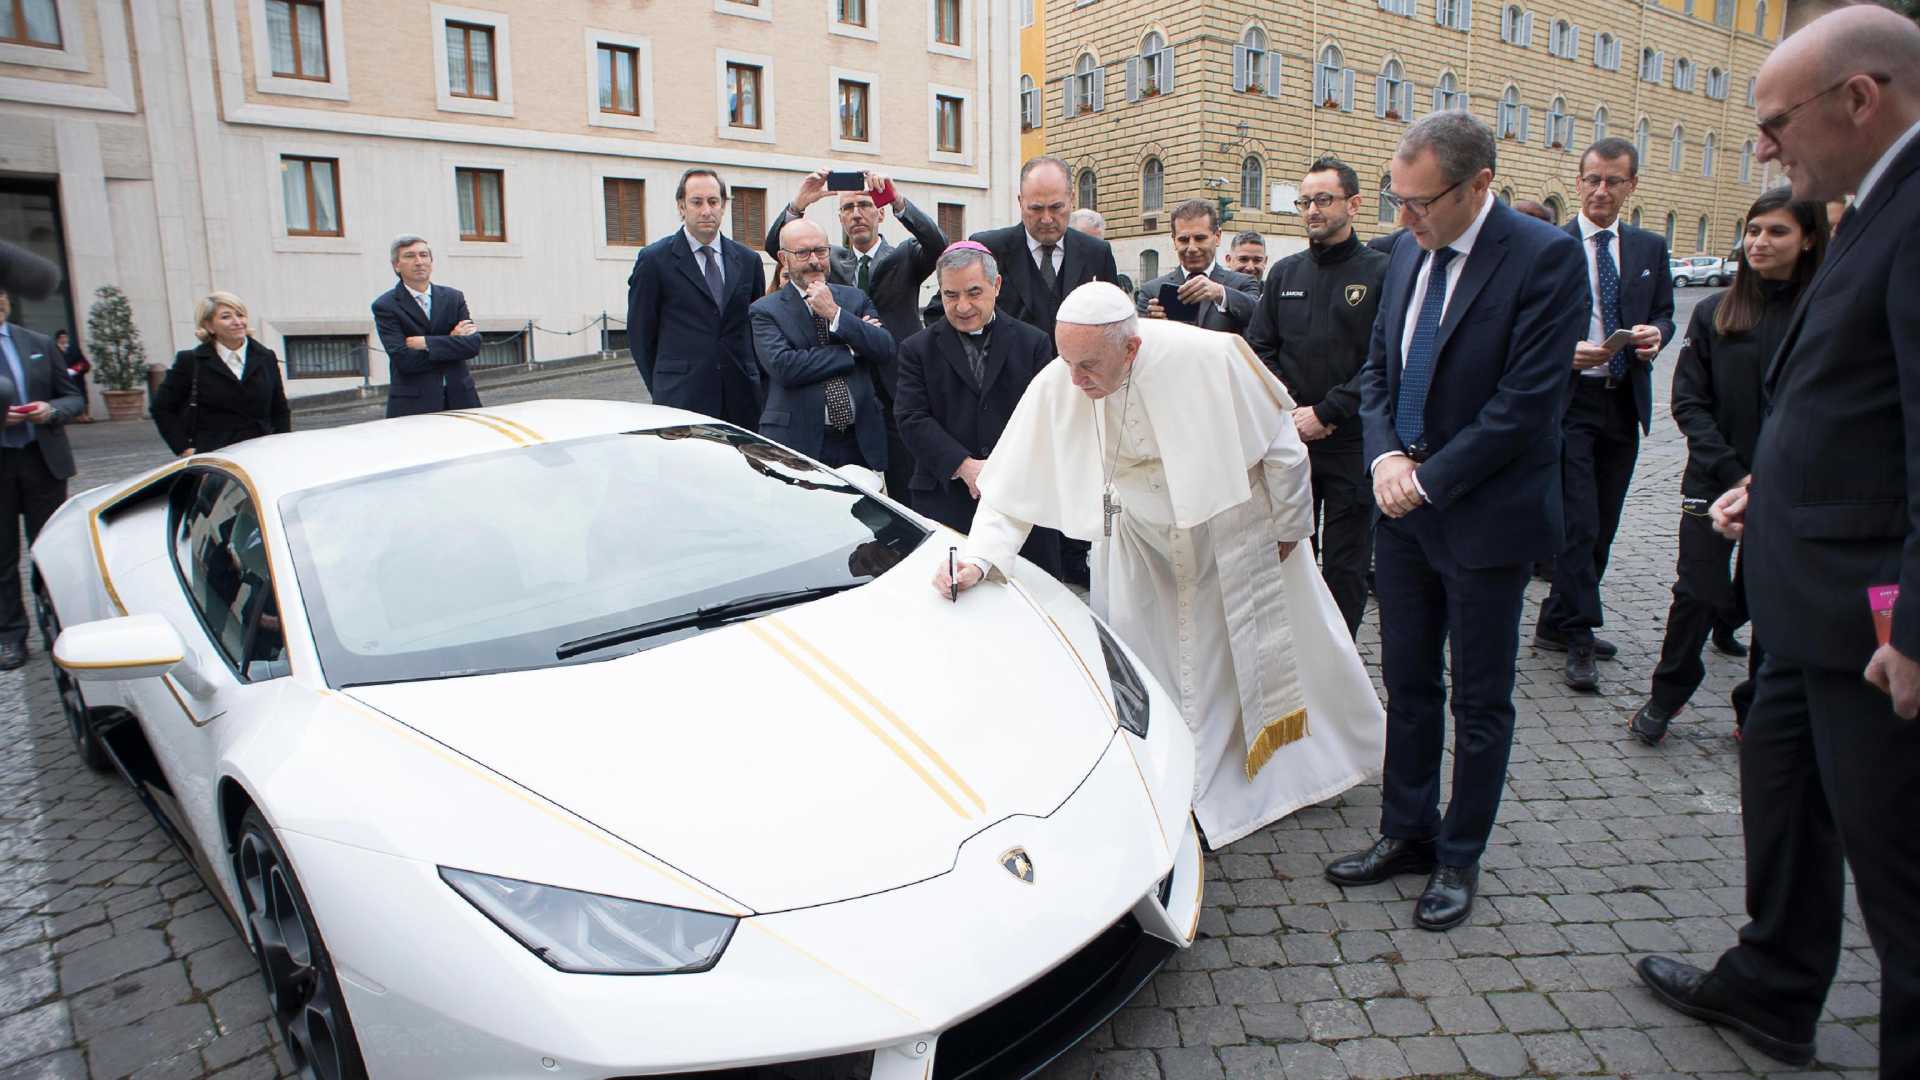 Lamborghini do Papa Francisco leiloado por 715 mil euros